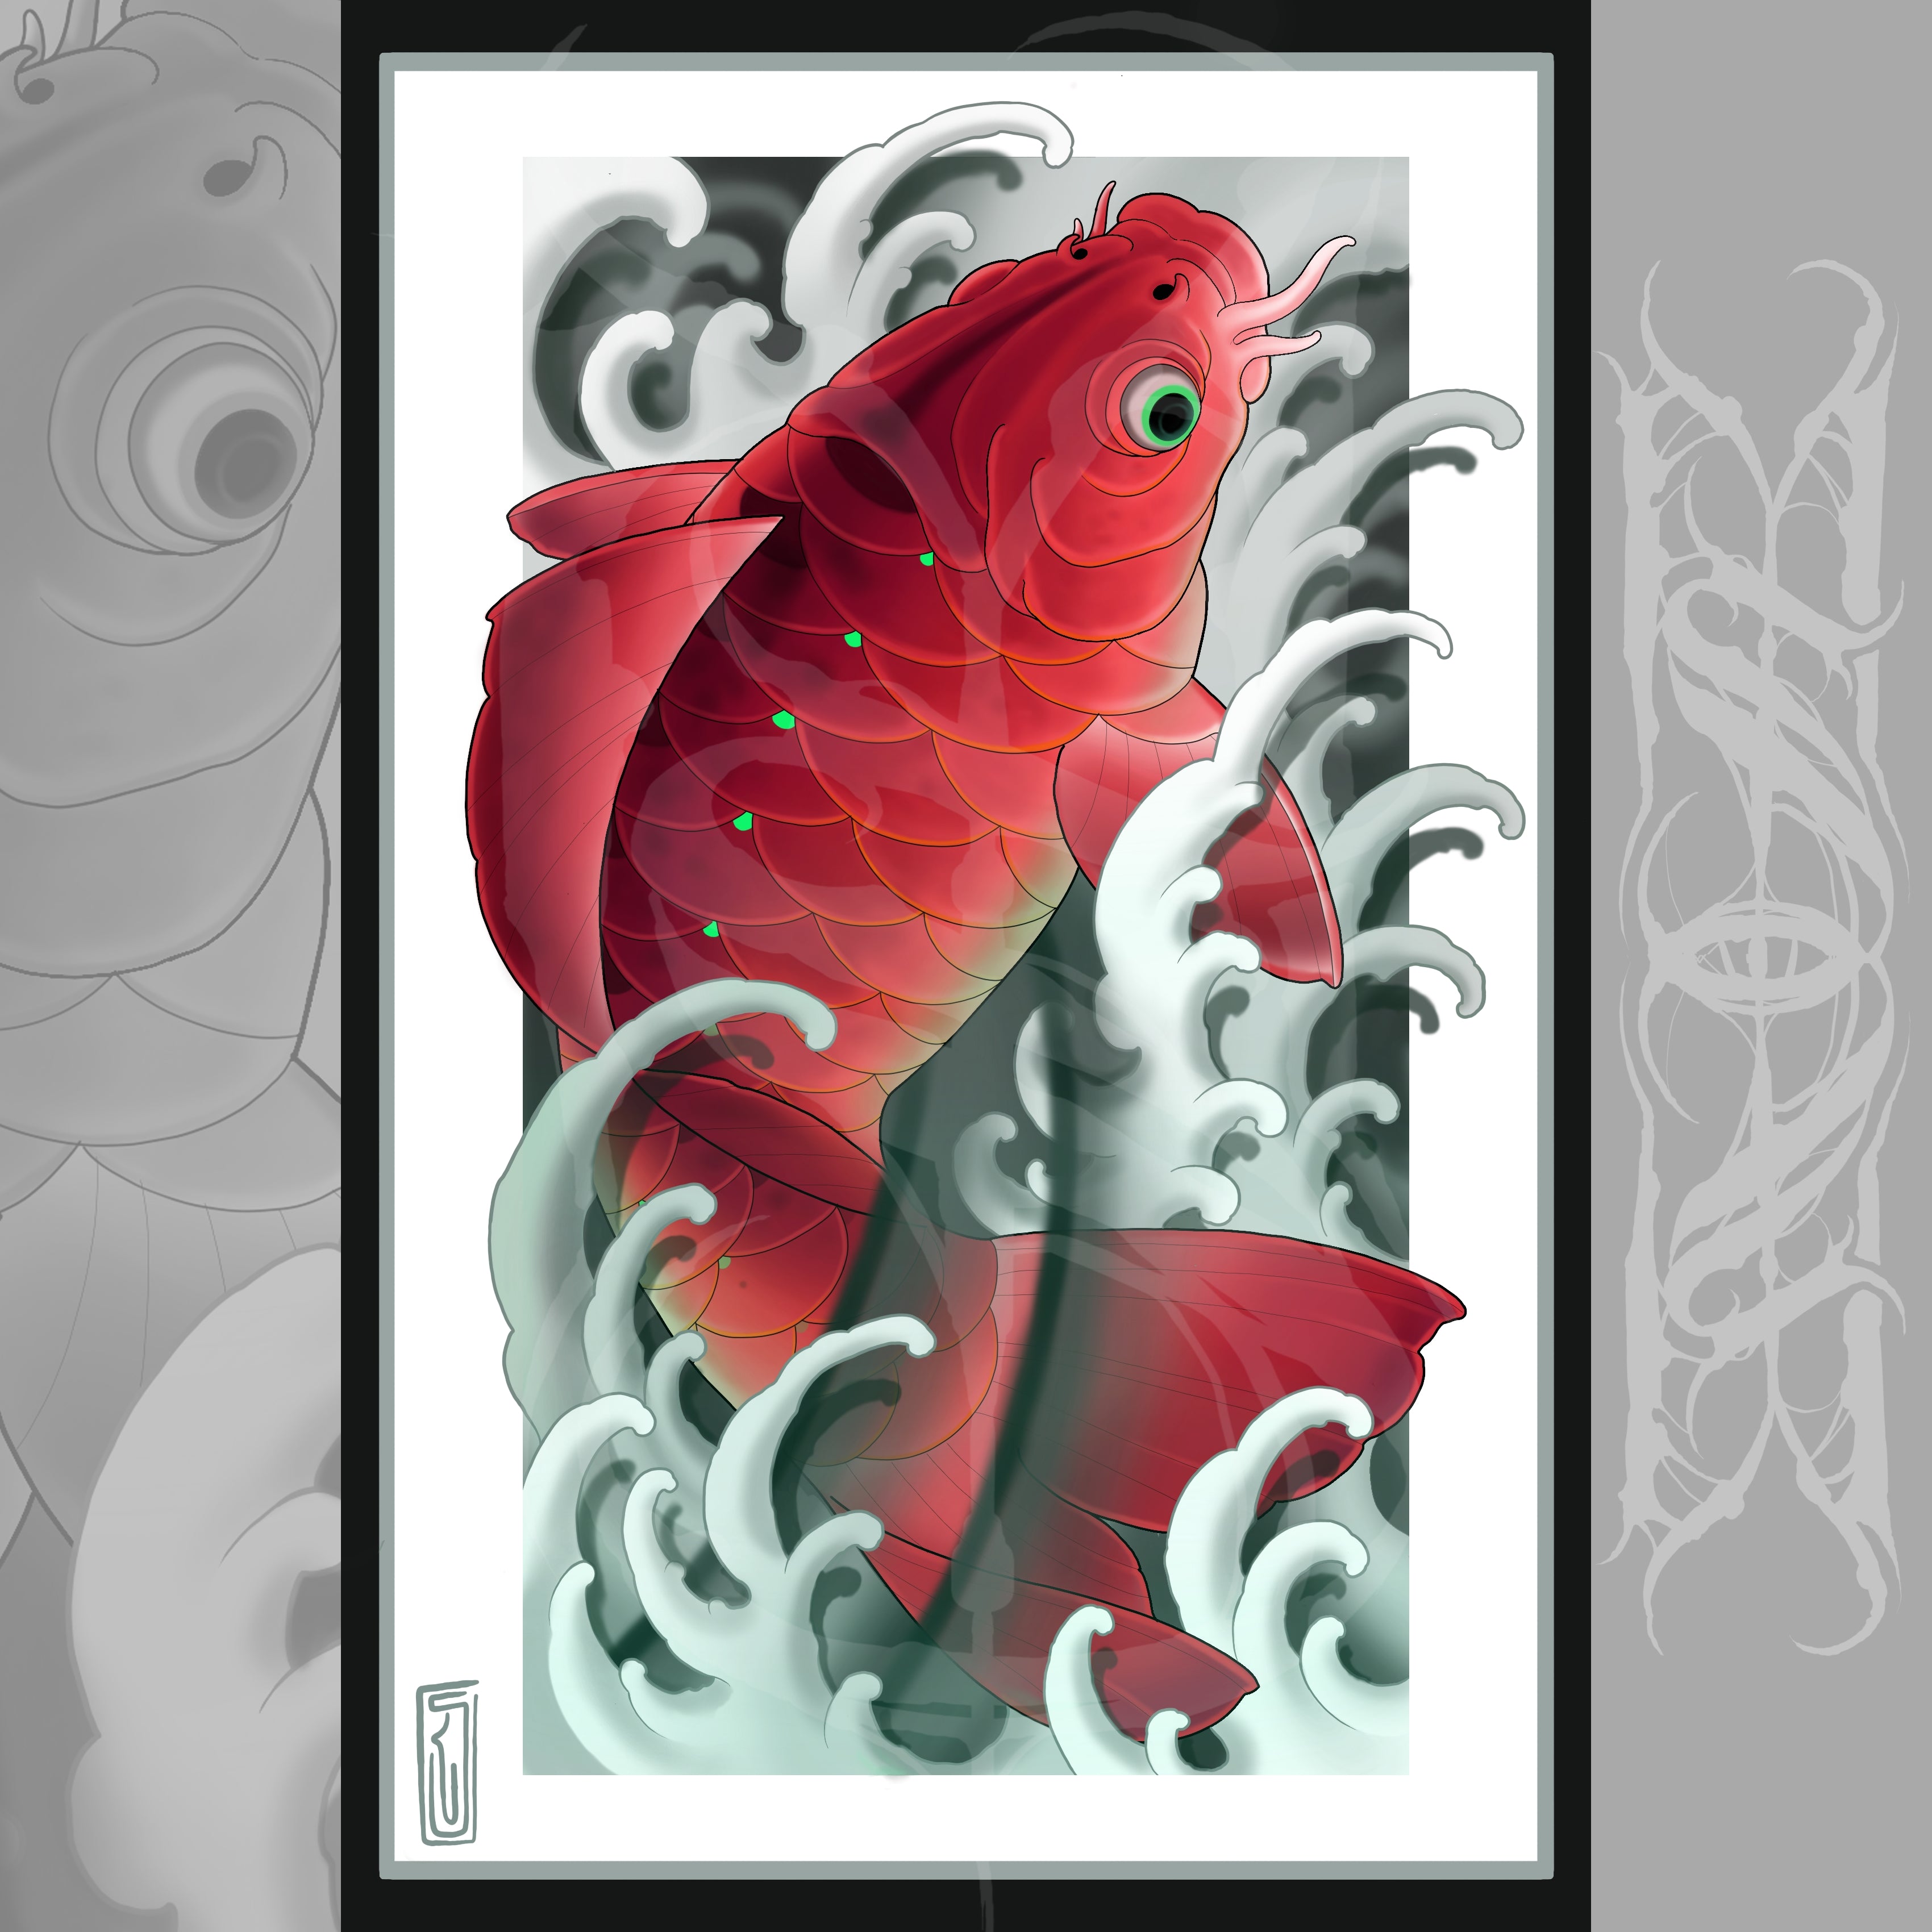 koi fish tattoo paintings